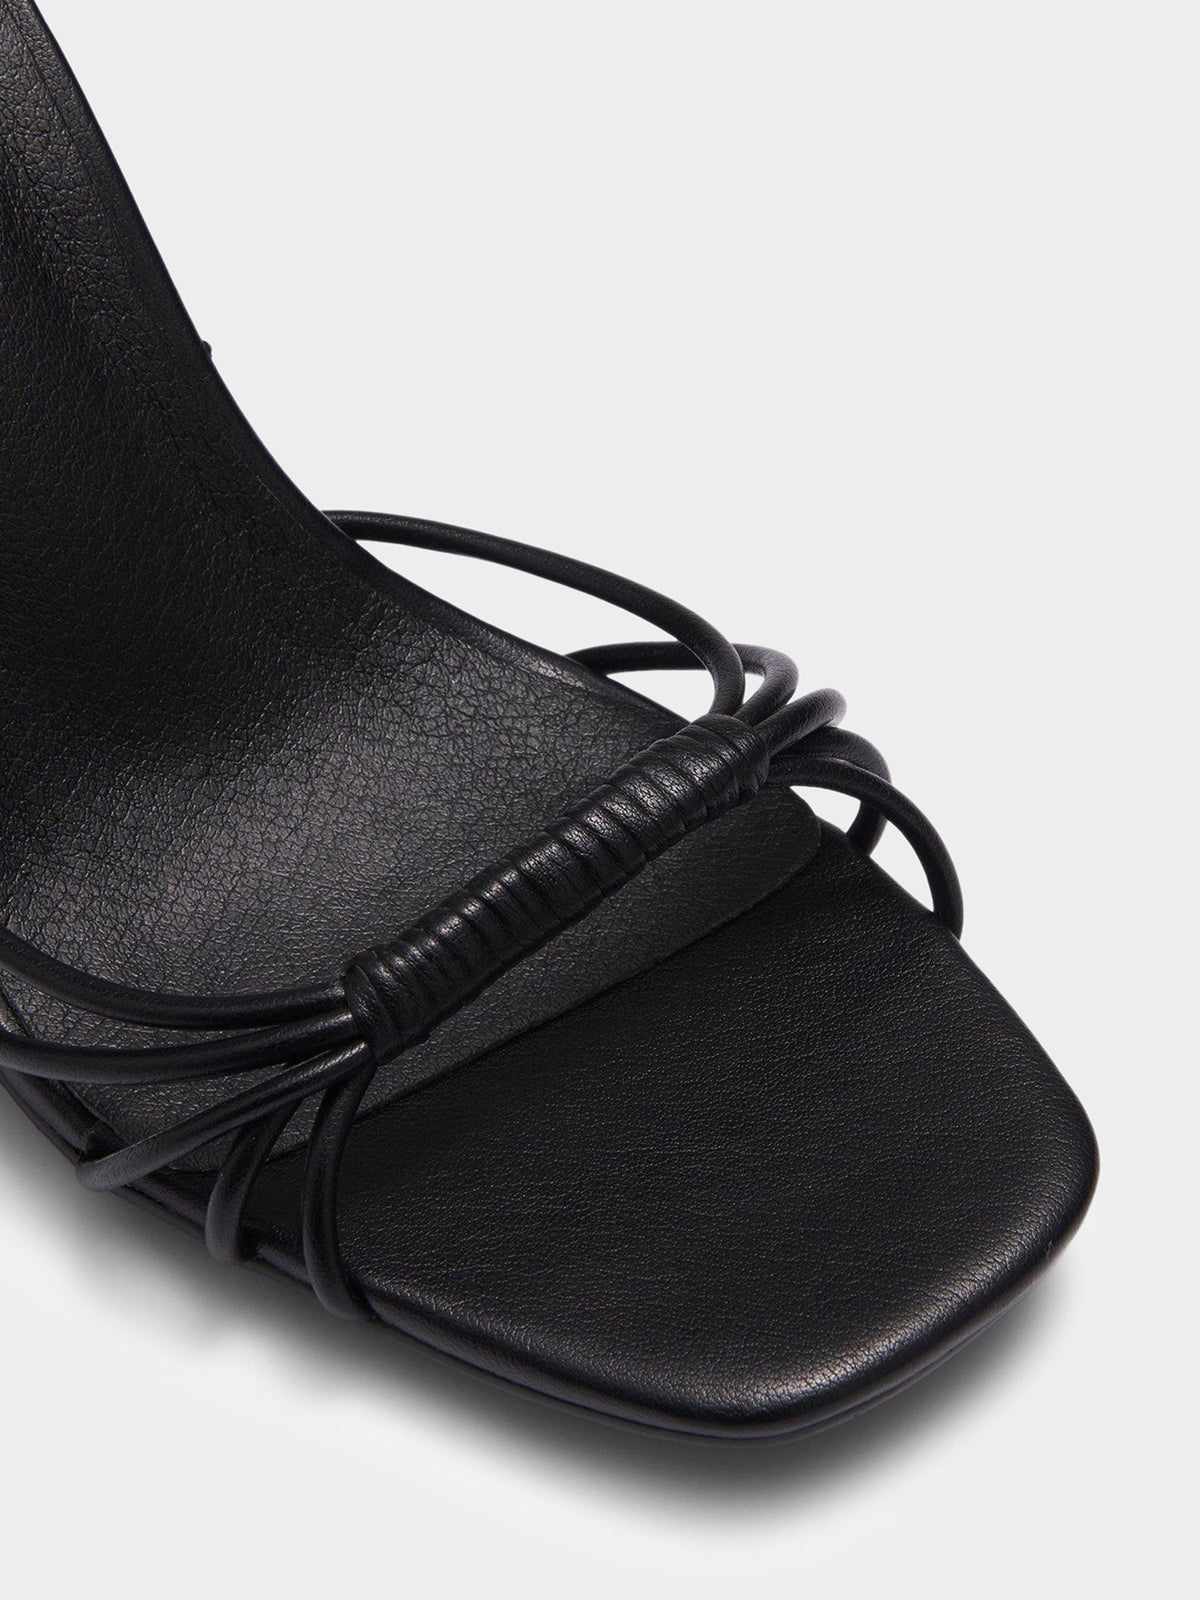 Womens Bexley Heels in Black